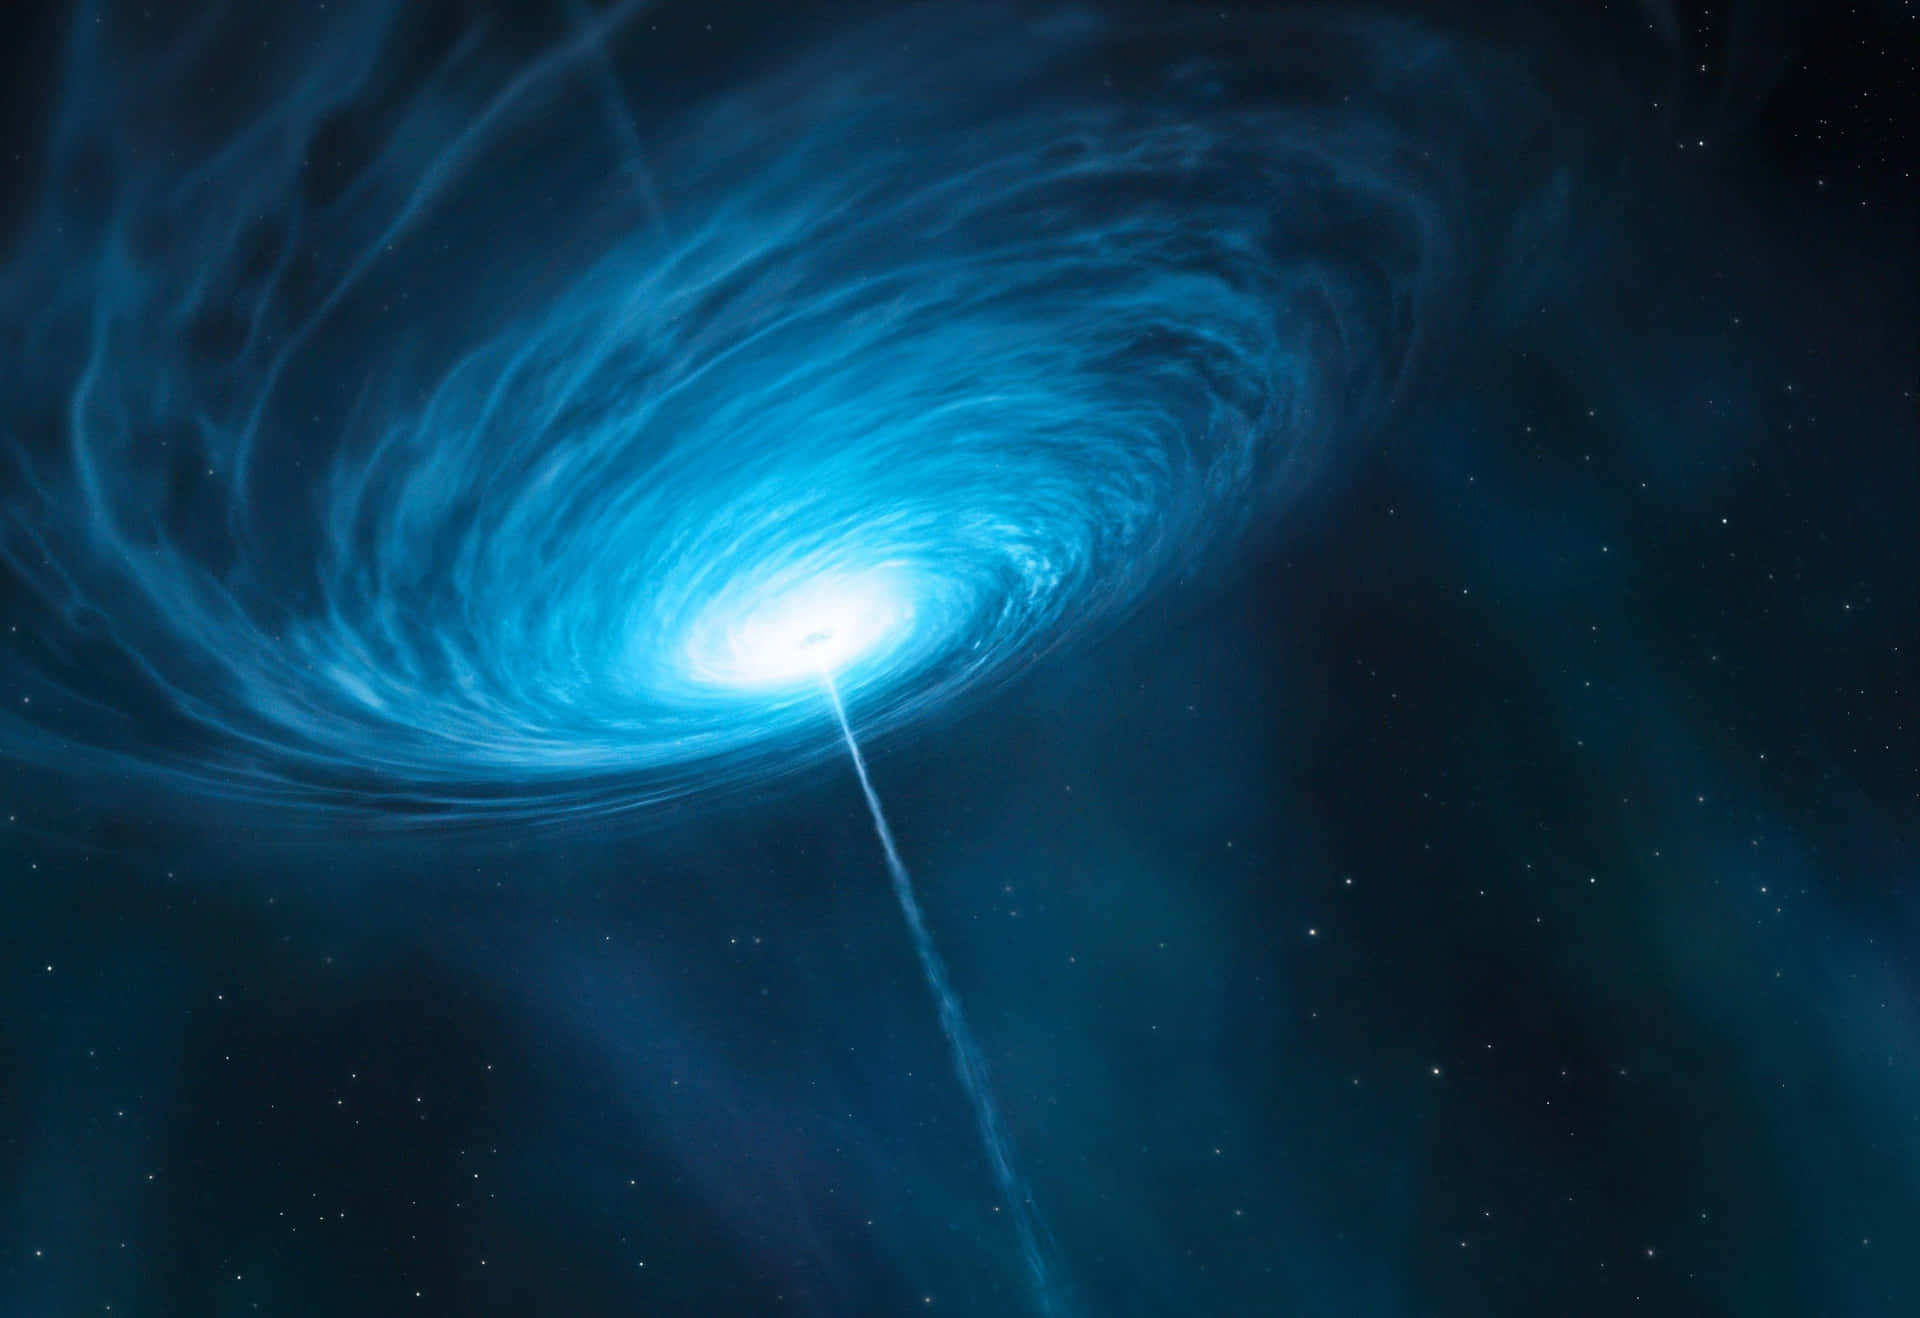 Stunning Quasar In Space